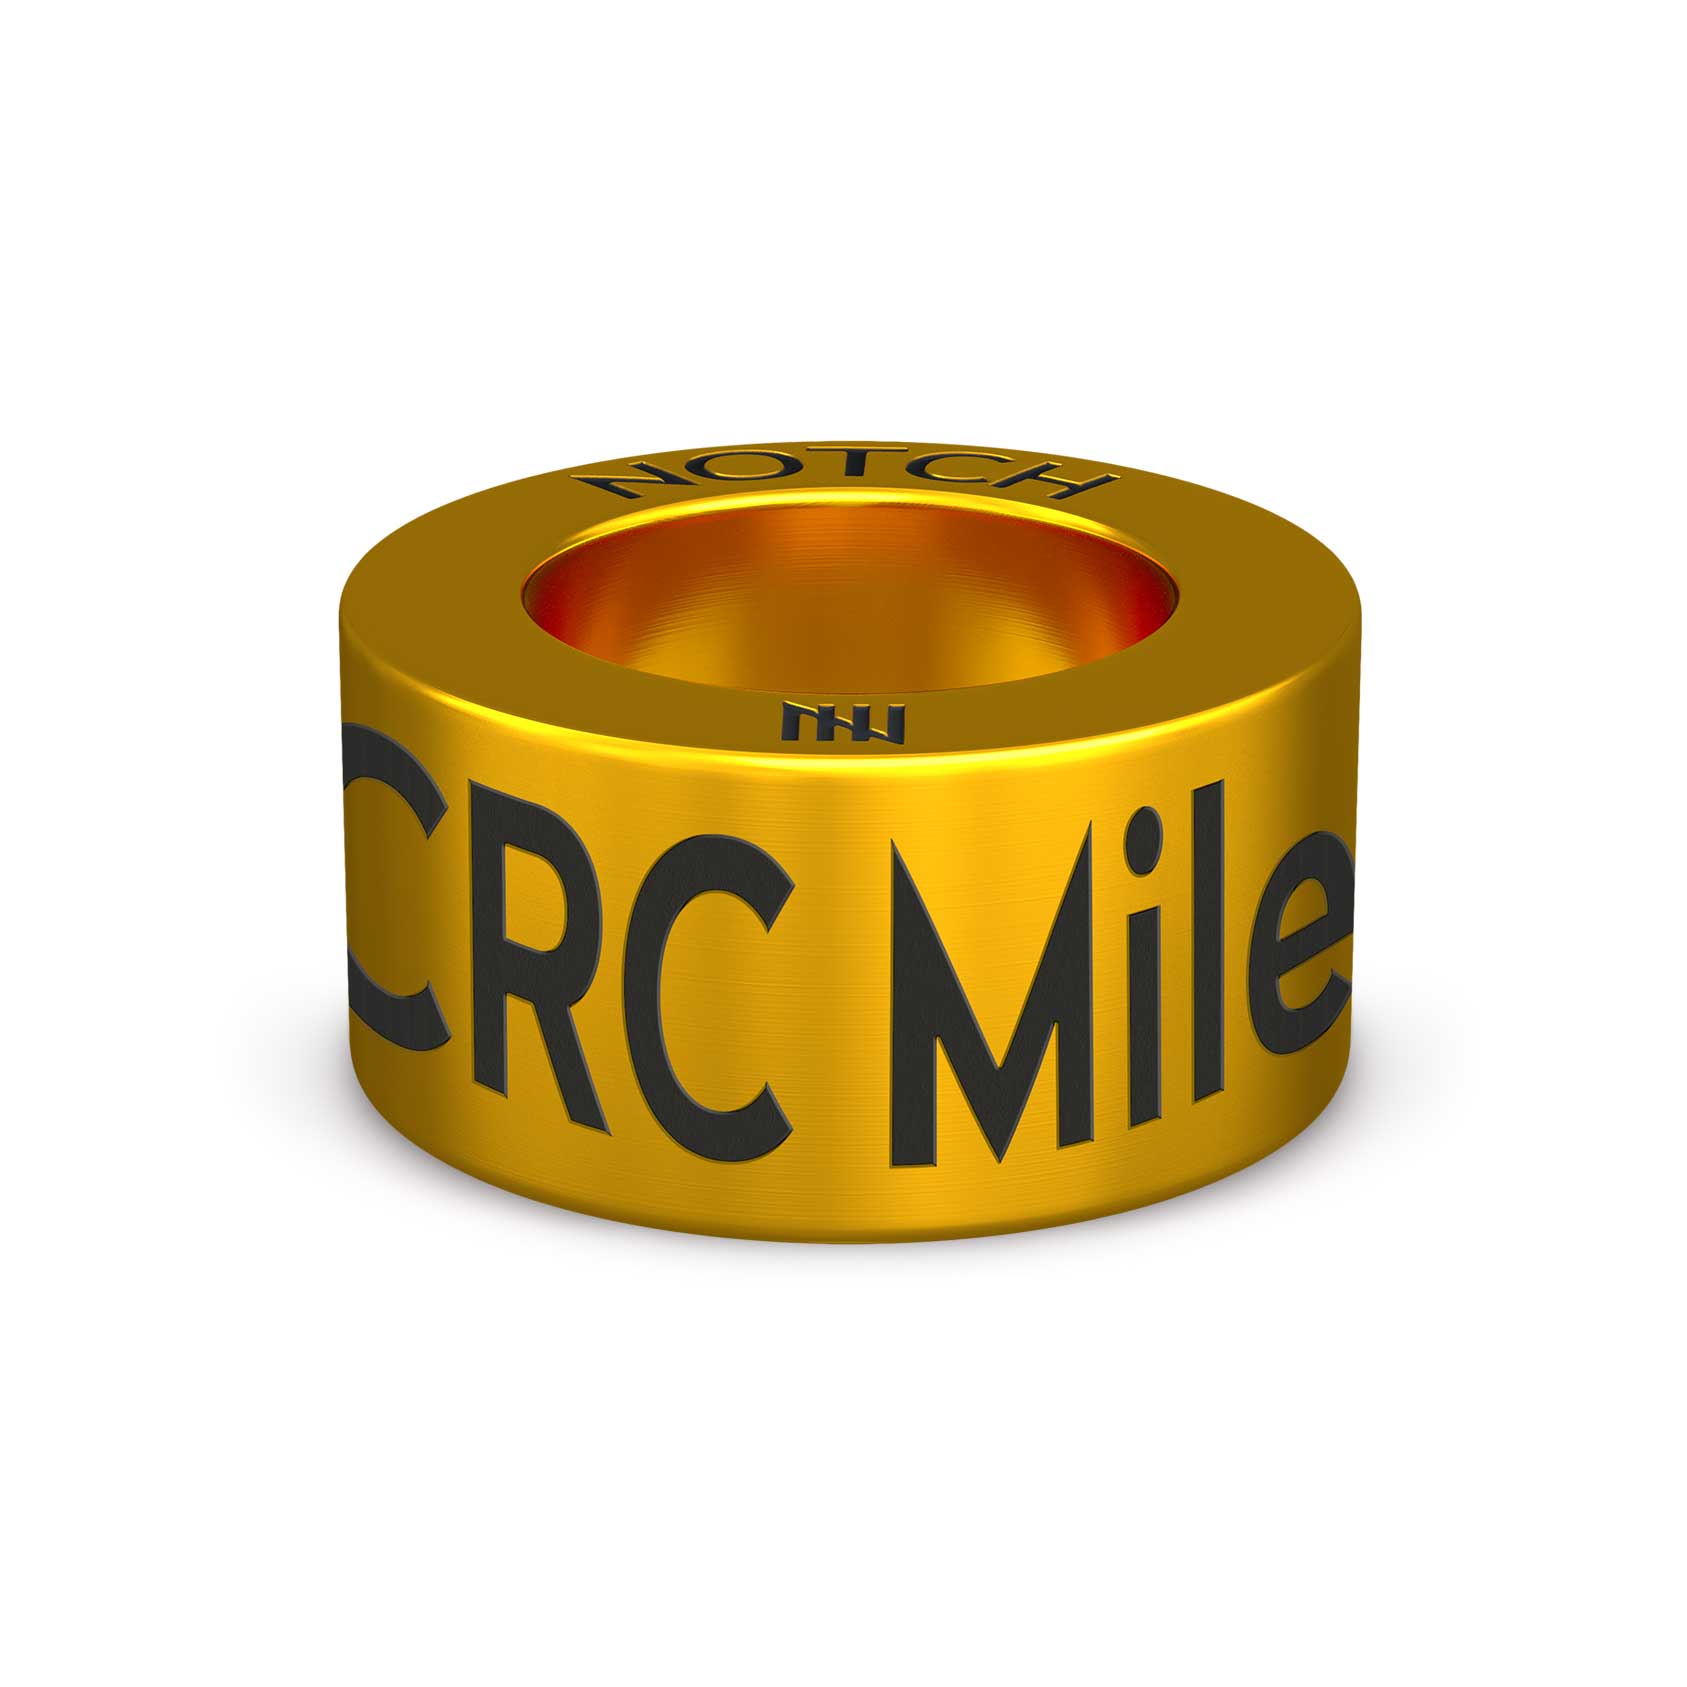 CRC Mile Challenge NOTCH Charm